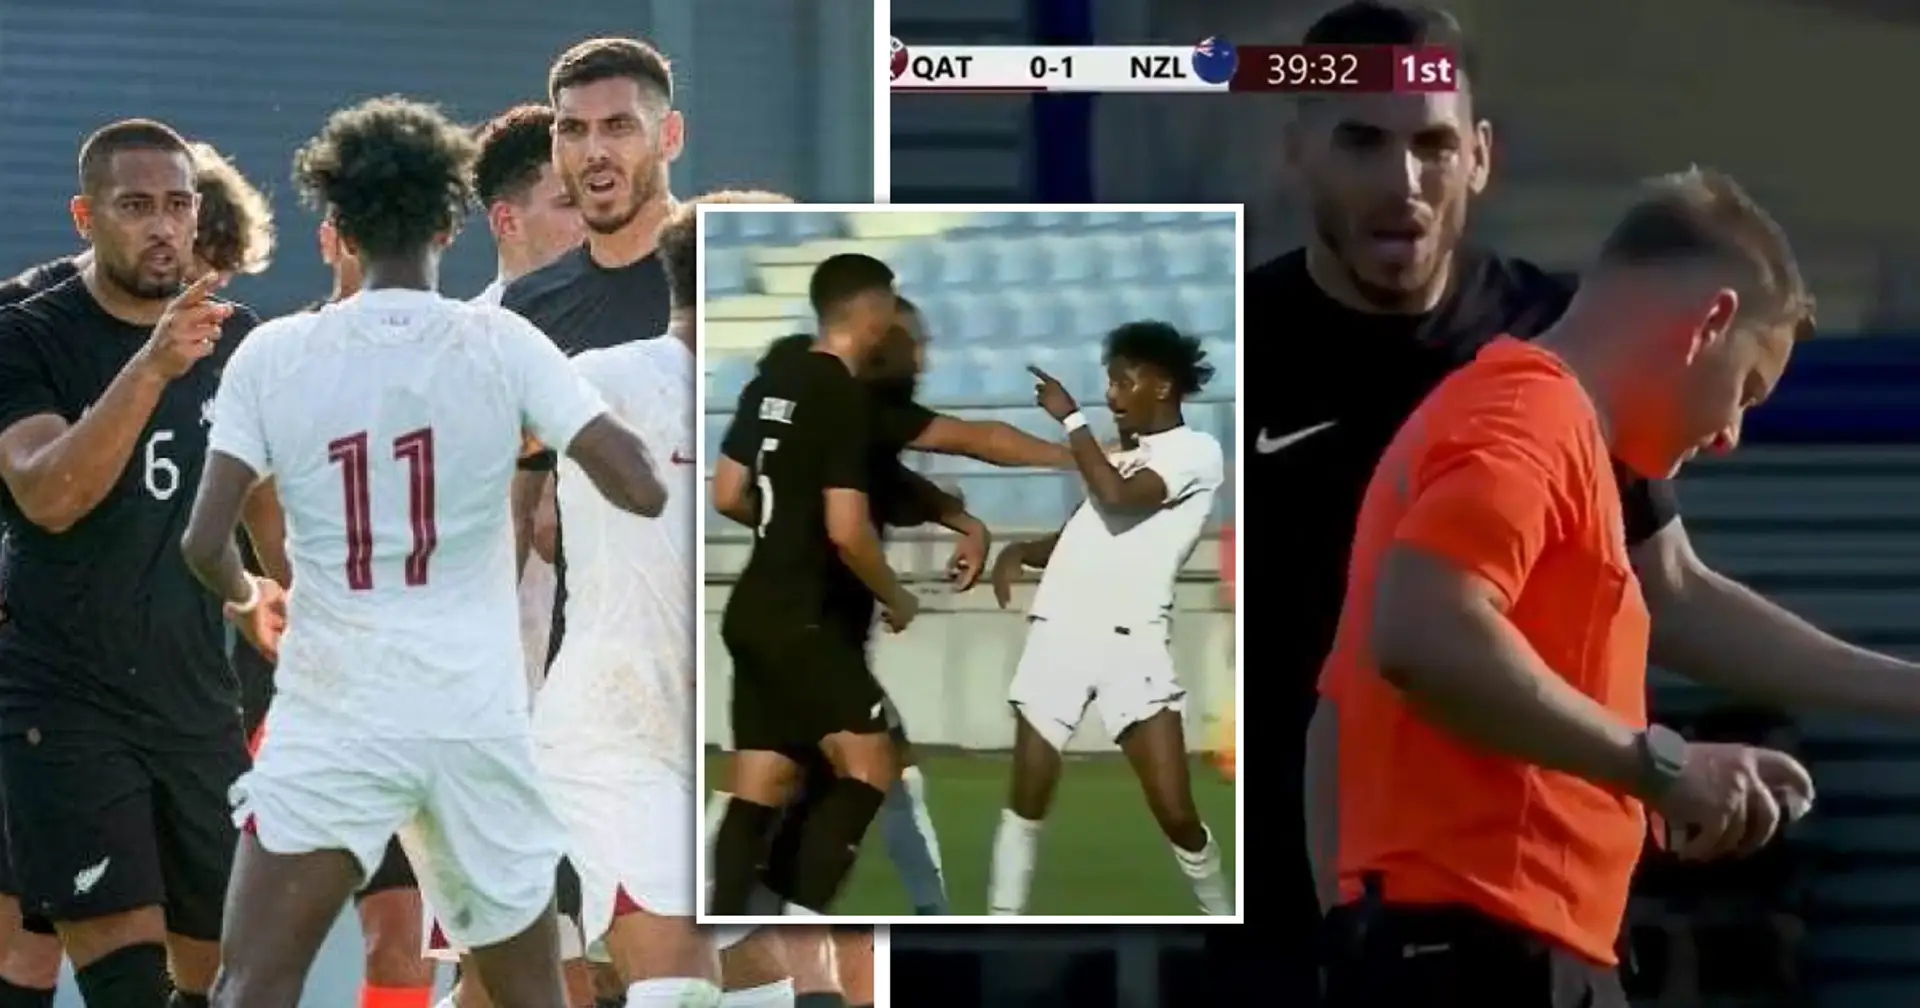 All Whites abandon match vs Qatar, claim their player was racially abused